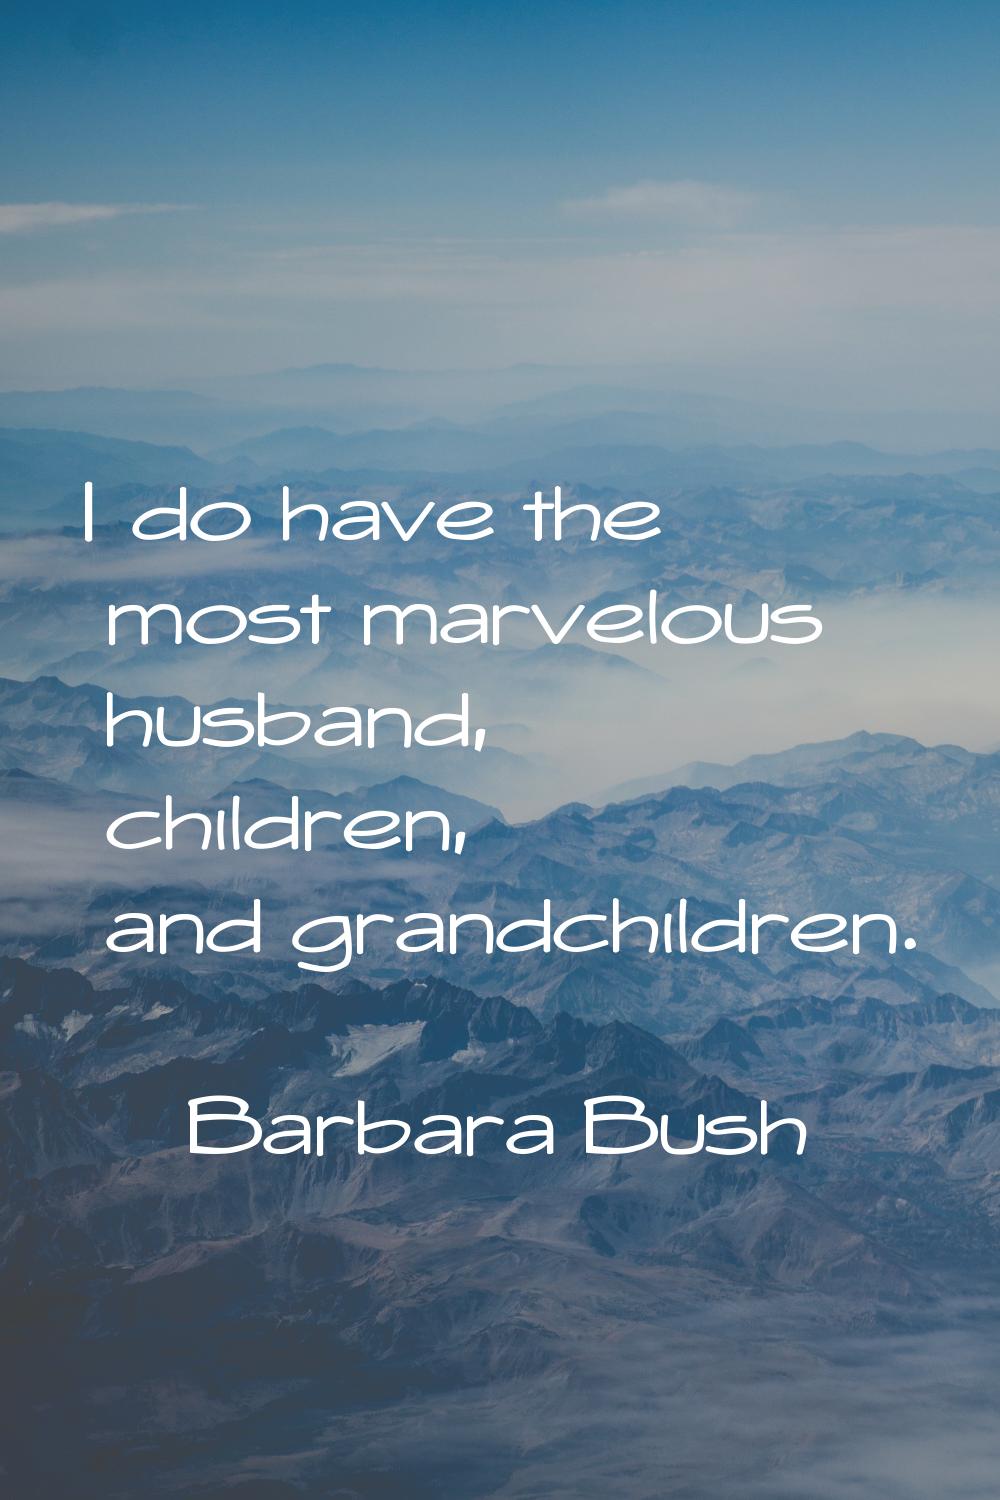 I do have the most marvelous husband, children, and grandchildren.